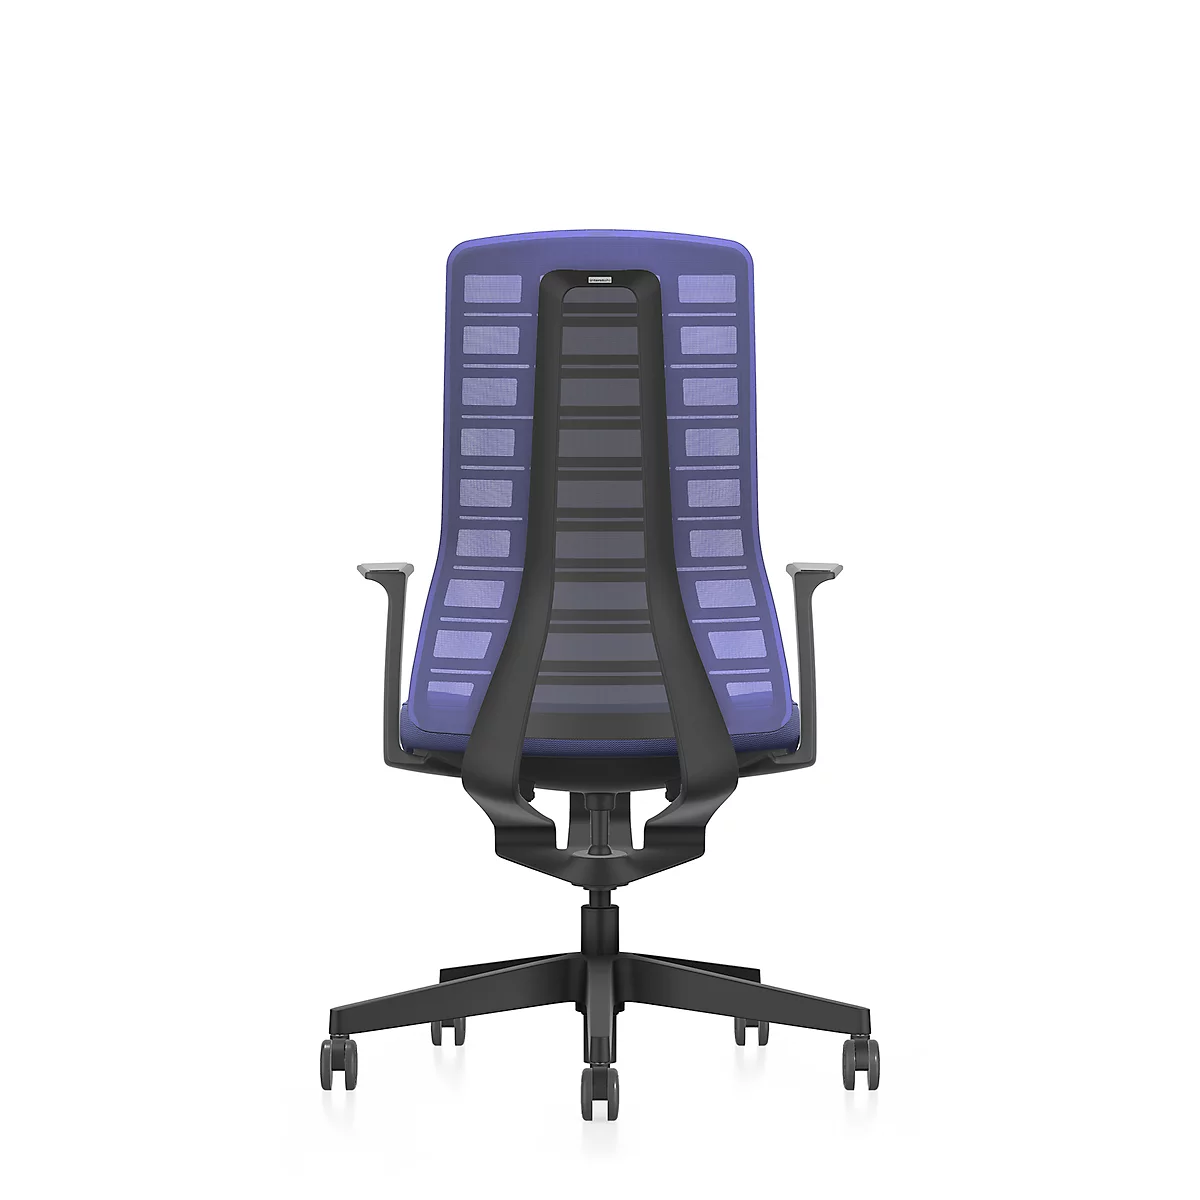 Interstuhl bureaustoel PUREis3, vaste armleuningen, 3D auto-synchroonmechanisme, kuipzitting, gazen rugleuning, kobaltblauw/zwart